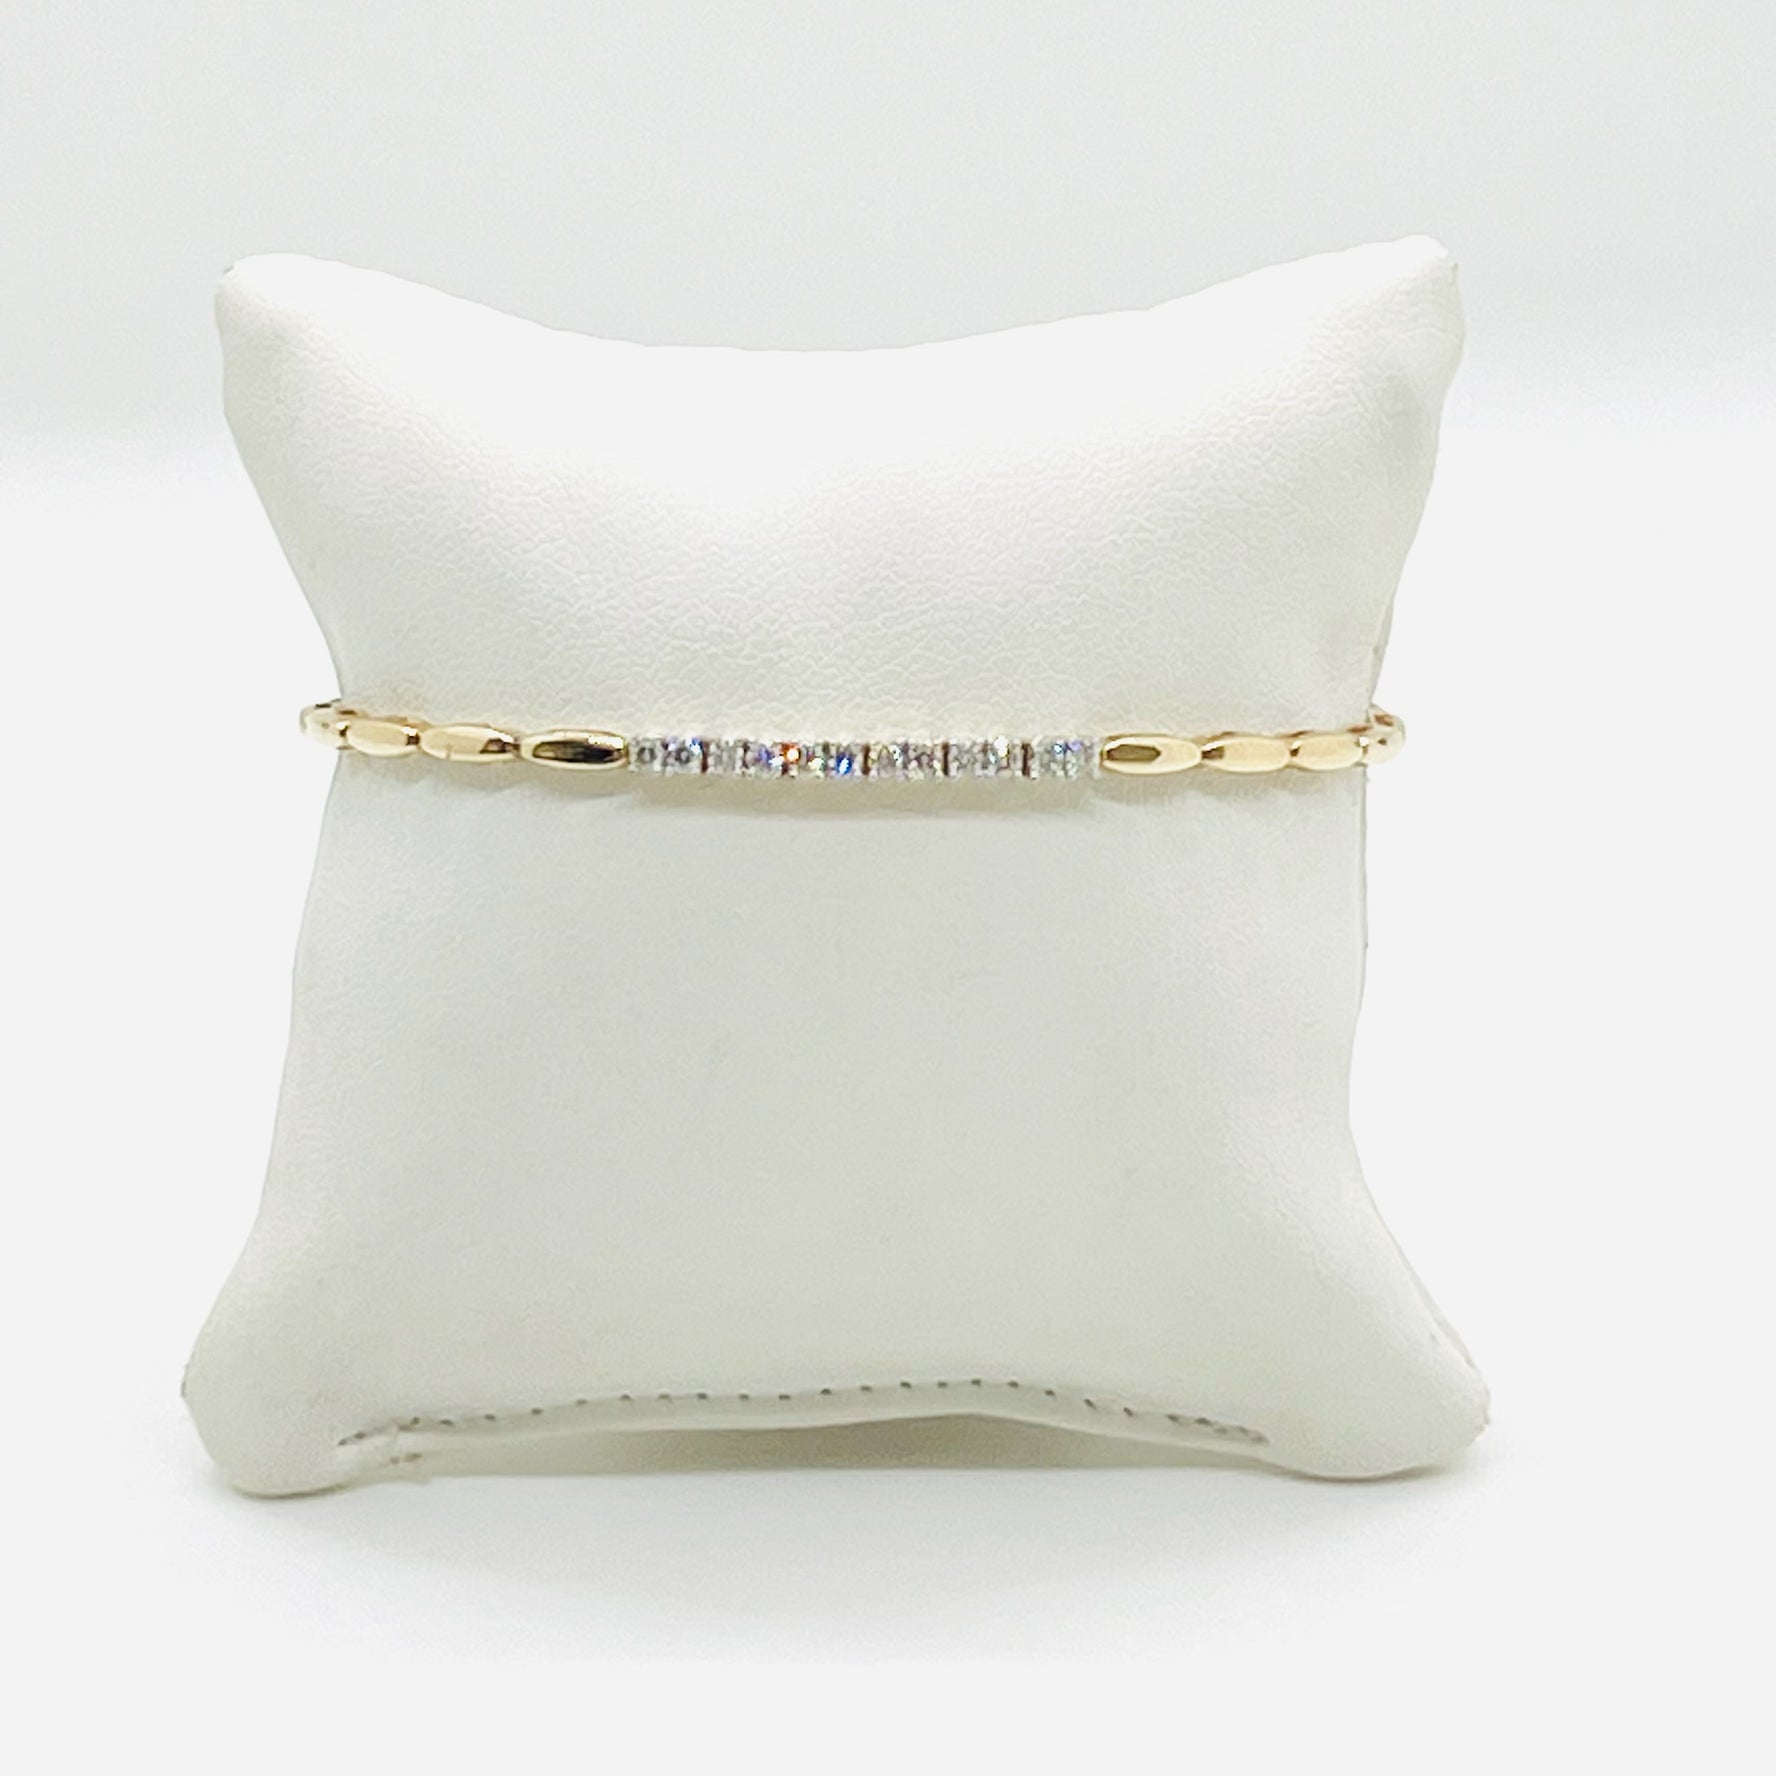 14k gold and diamond tennis bracelet